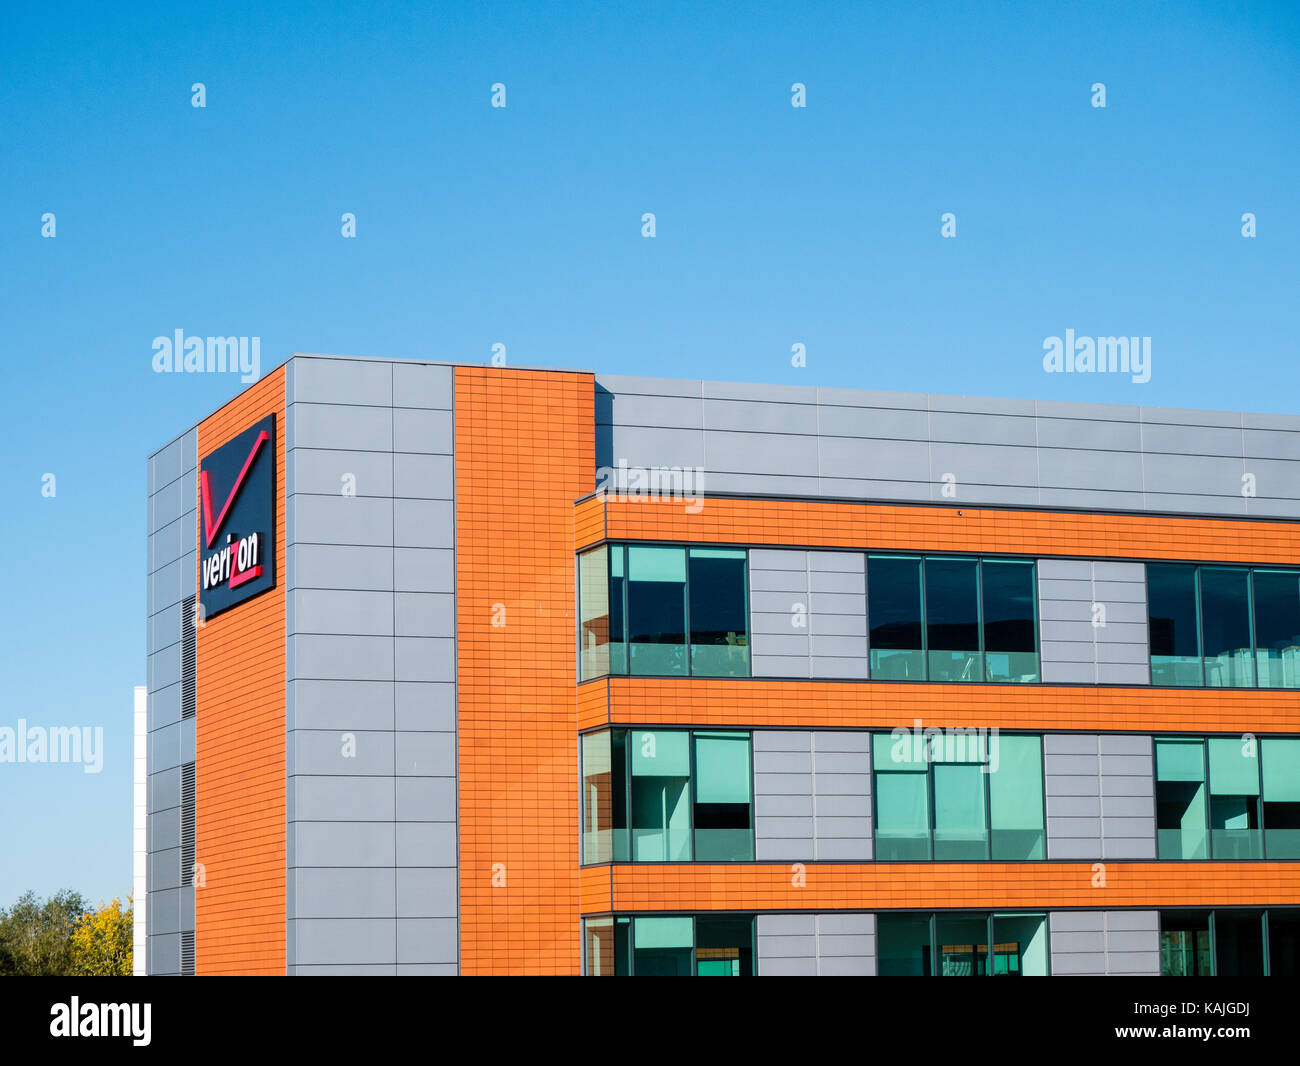 Verizon, Reading International Business Park, Reading, Berkshire, England, UK, GB. Stock Photo